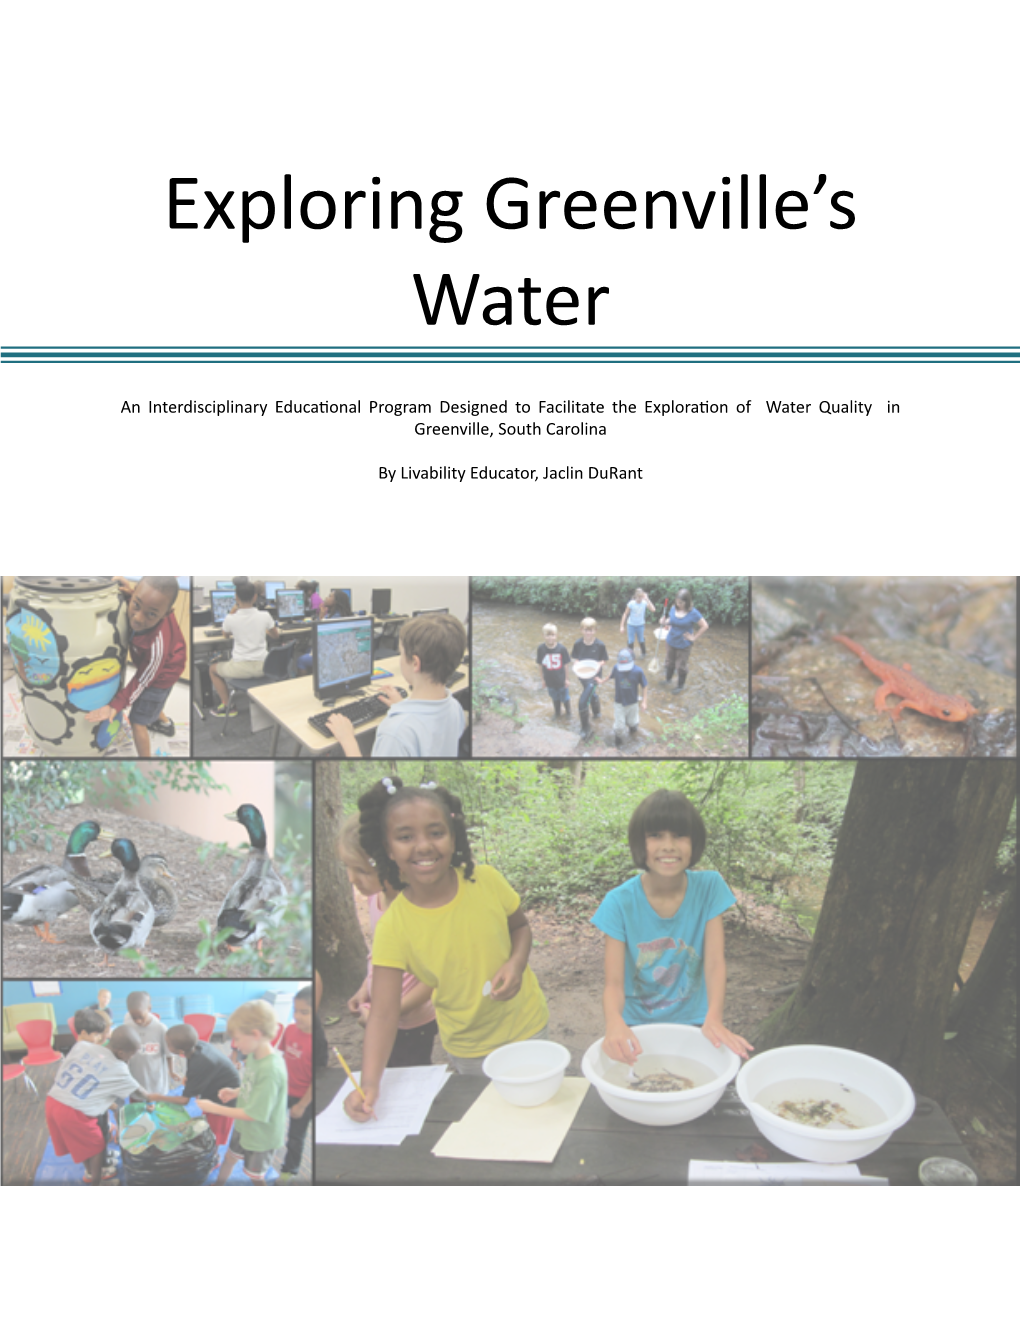 Exploring Greenville's Water